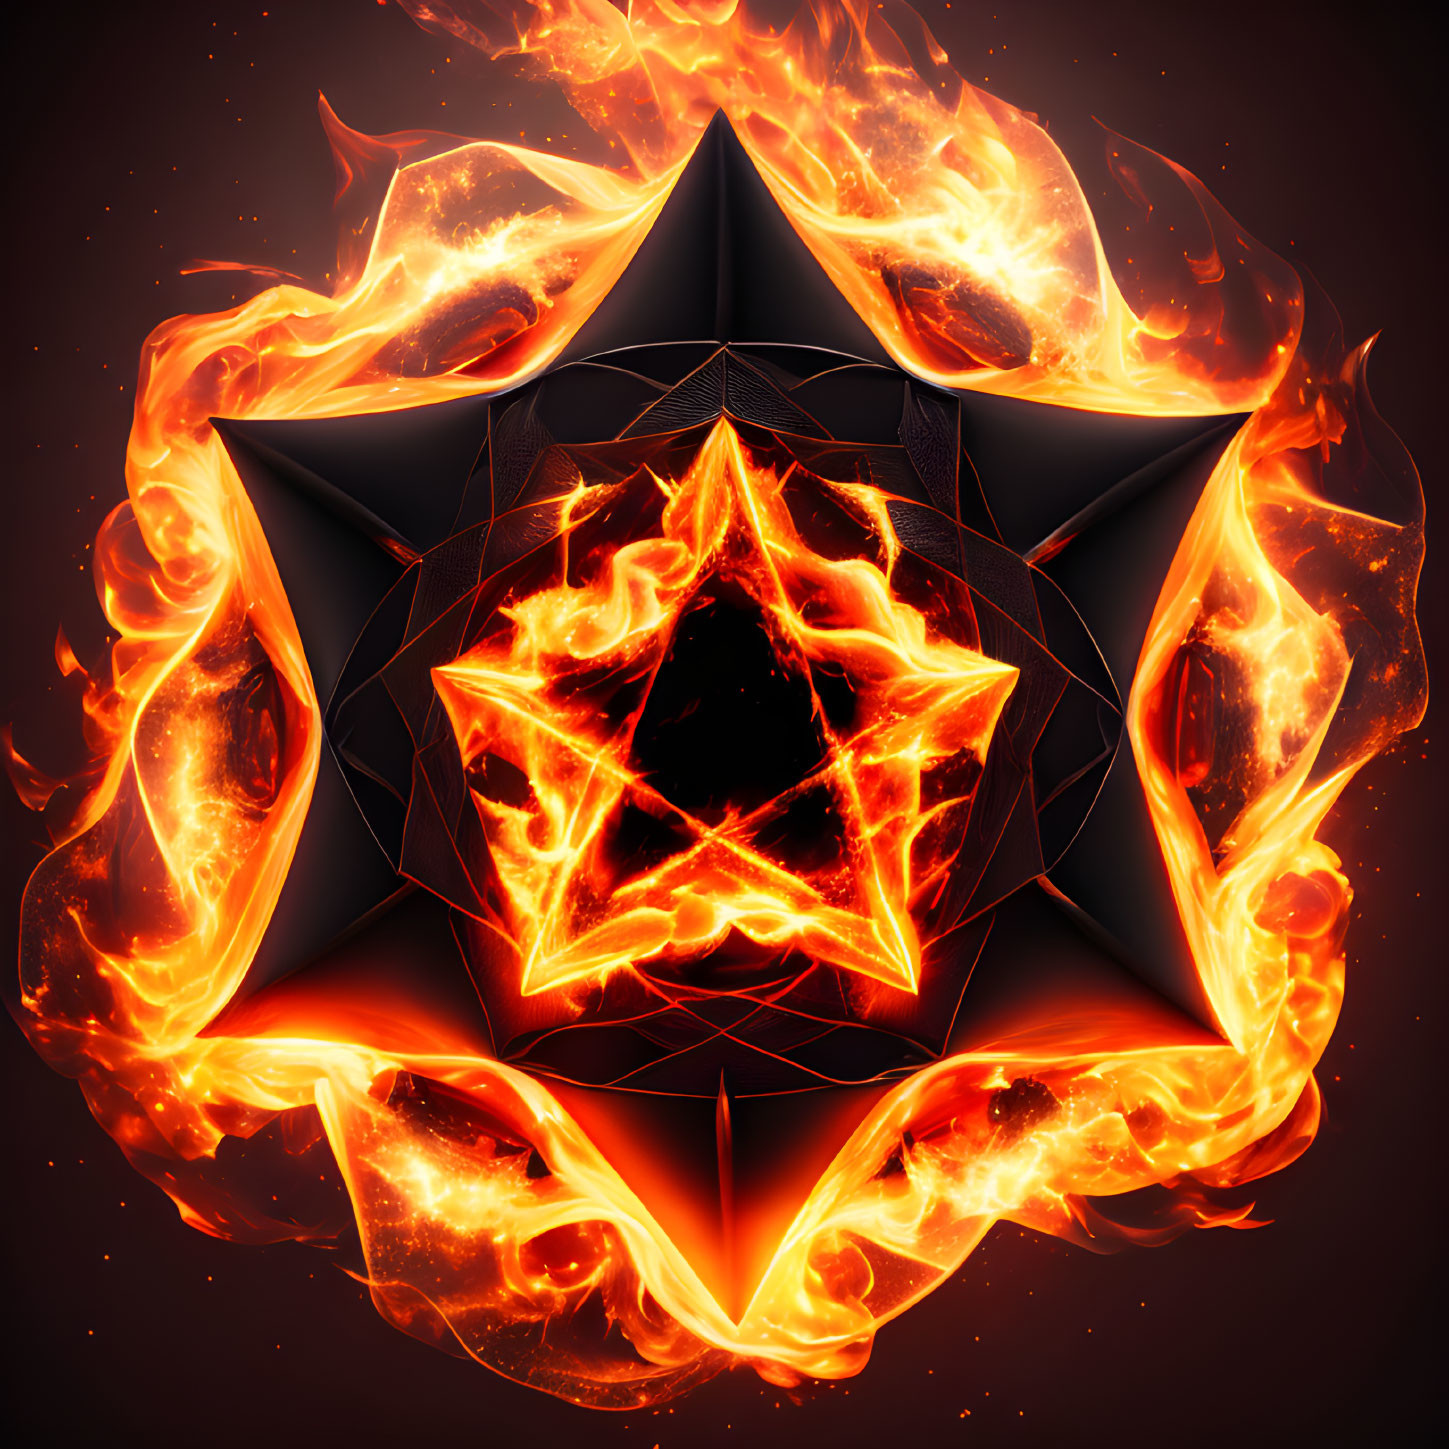 Colorful digital artwork: Fiery star with fractal design on dark background